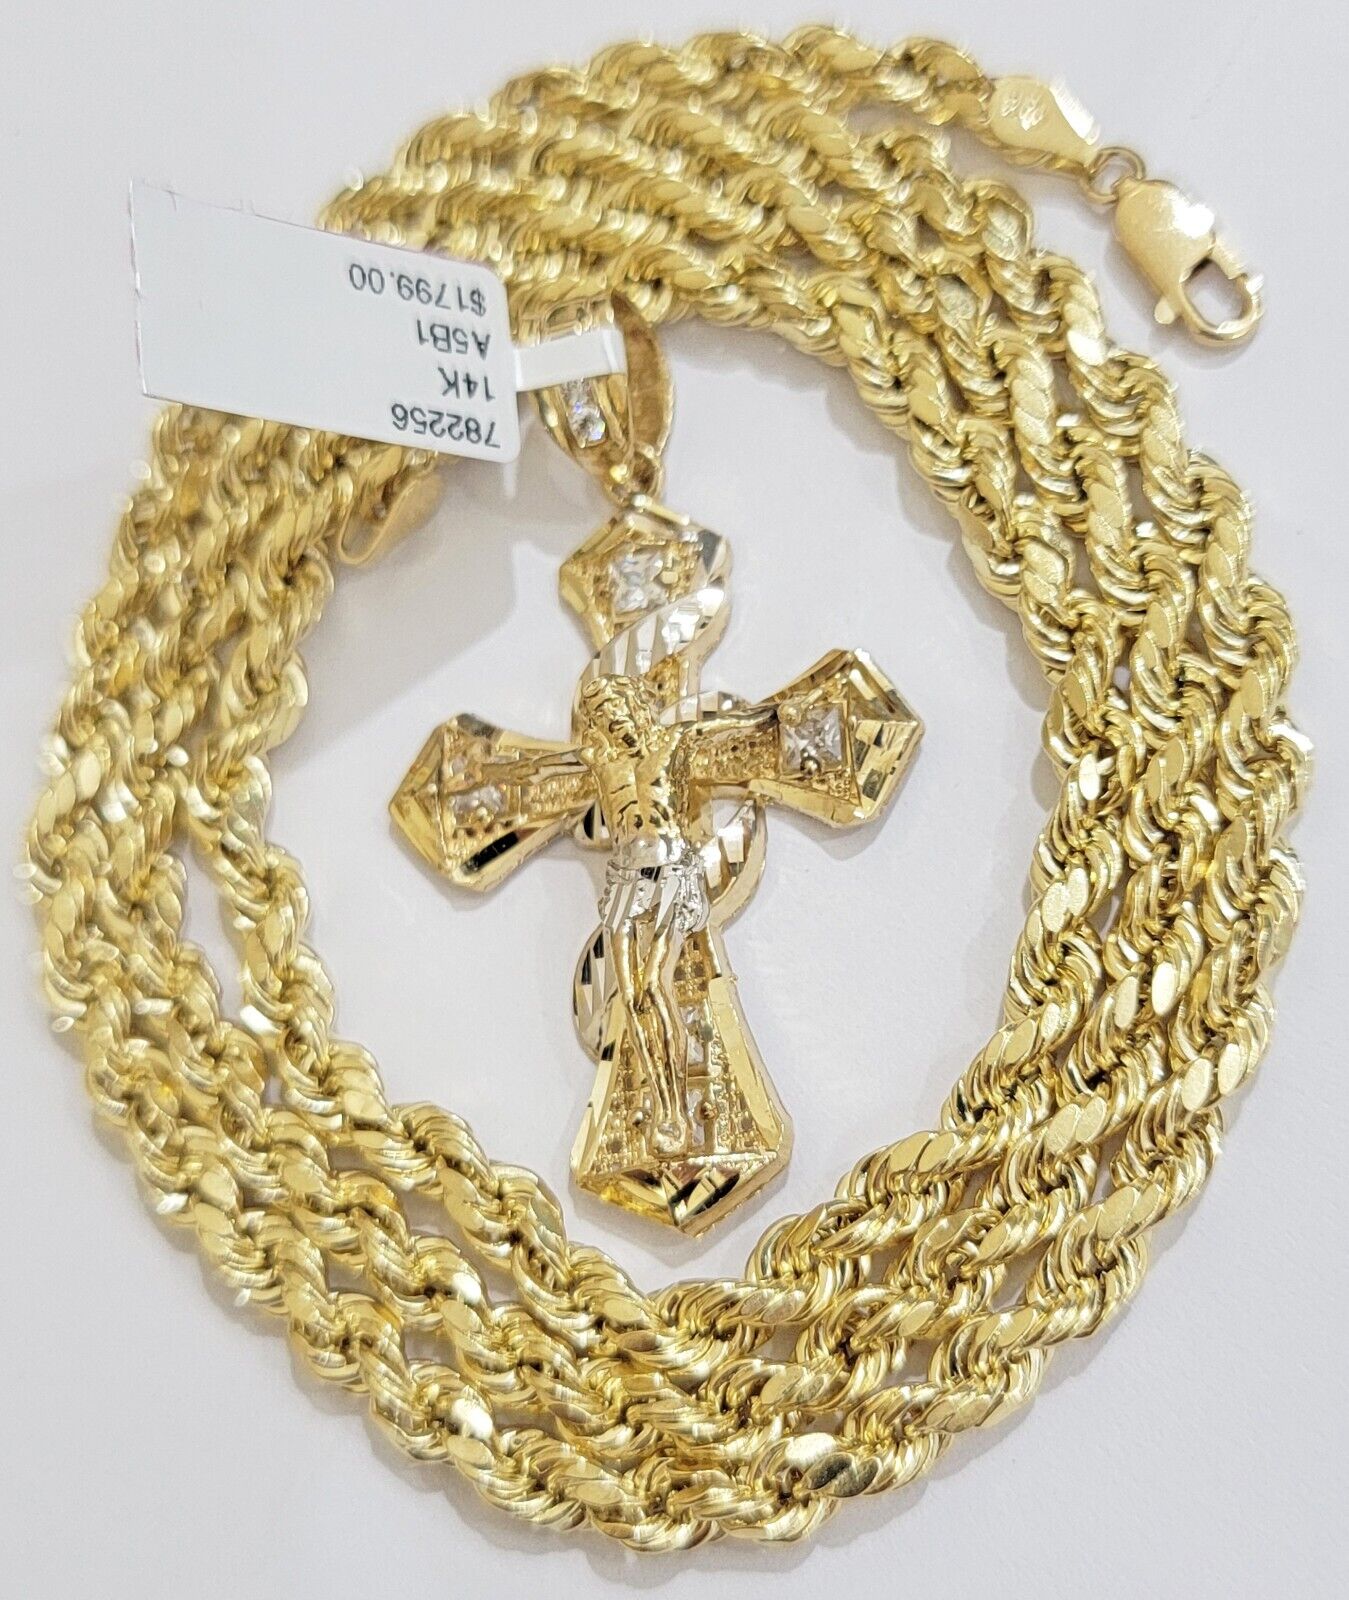 14k Gold Rope Chain Necklace Jesus Cross Charm Pendant Set 18-28